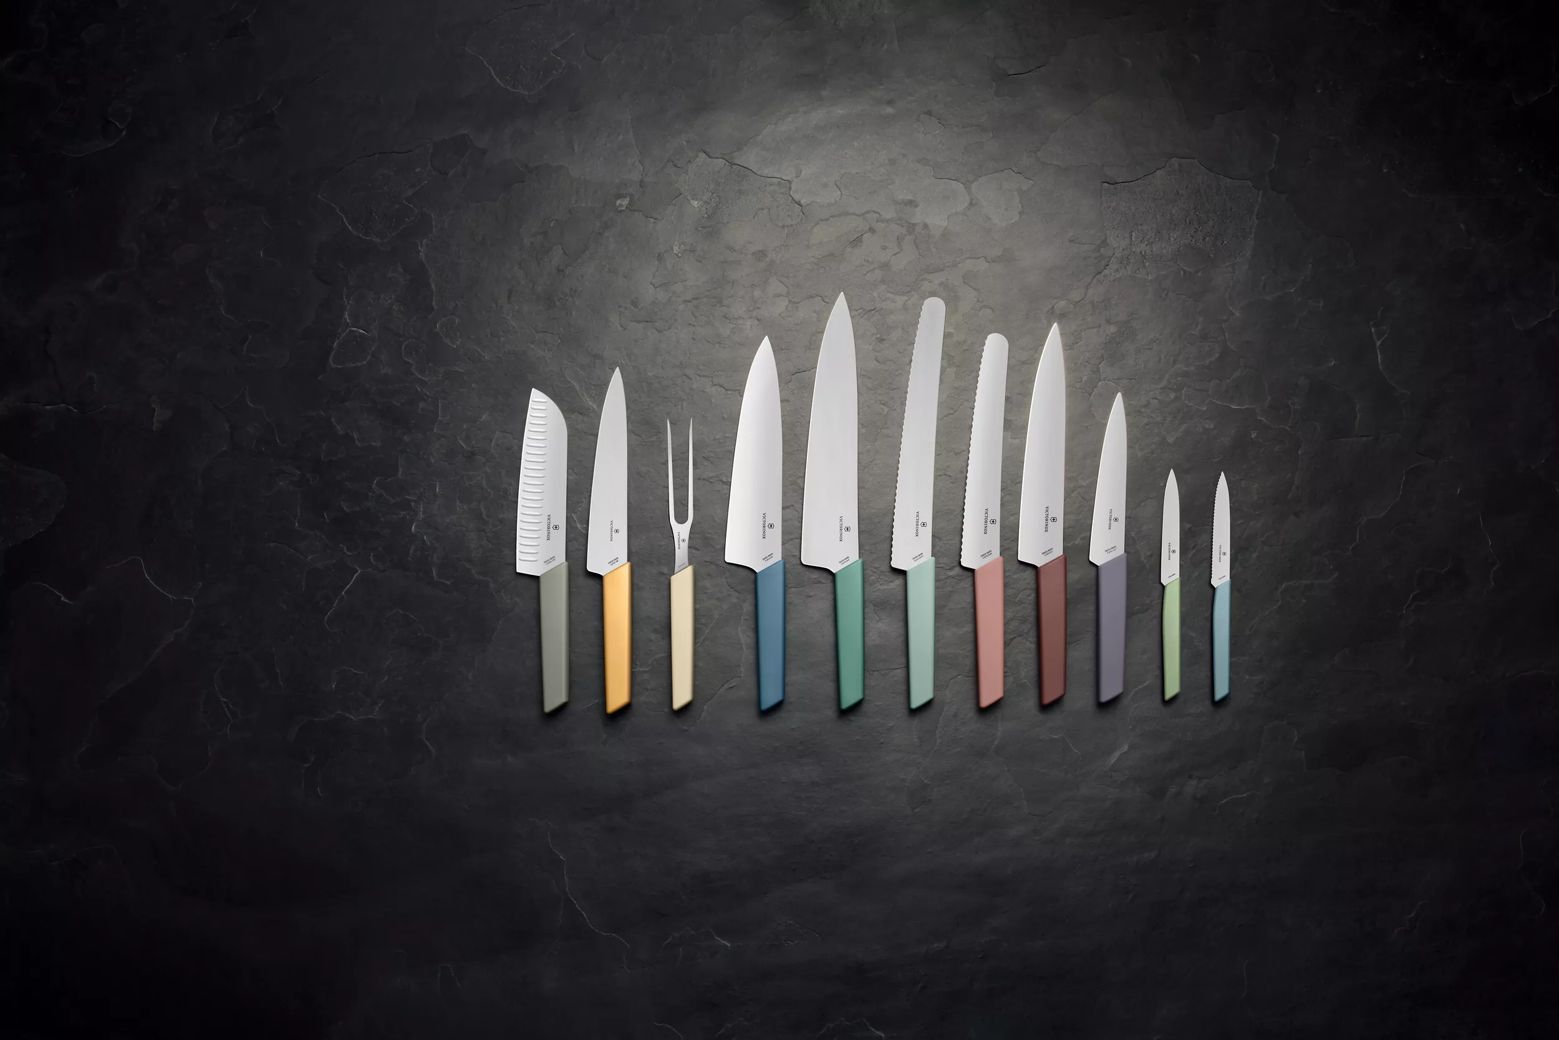 Cuchillo de chef SWISS MODERN, 20 cm, negro, Victorinox 